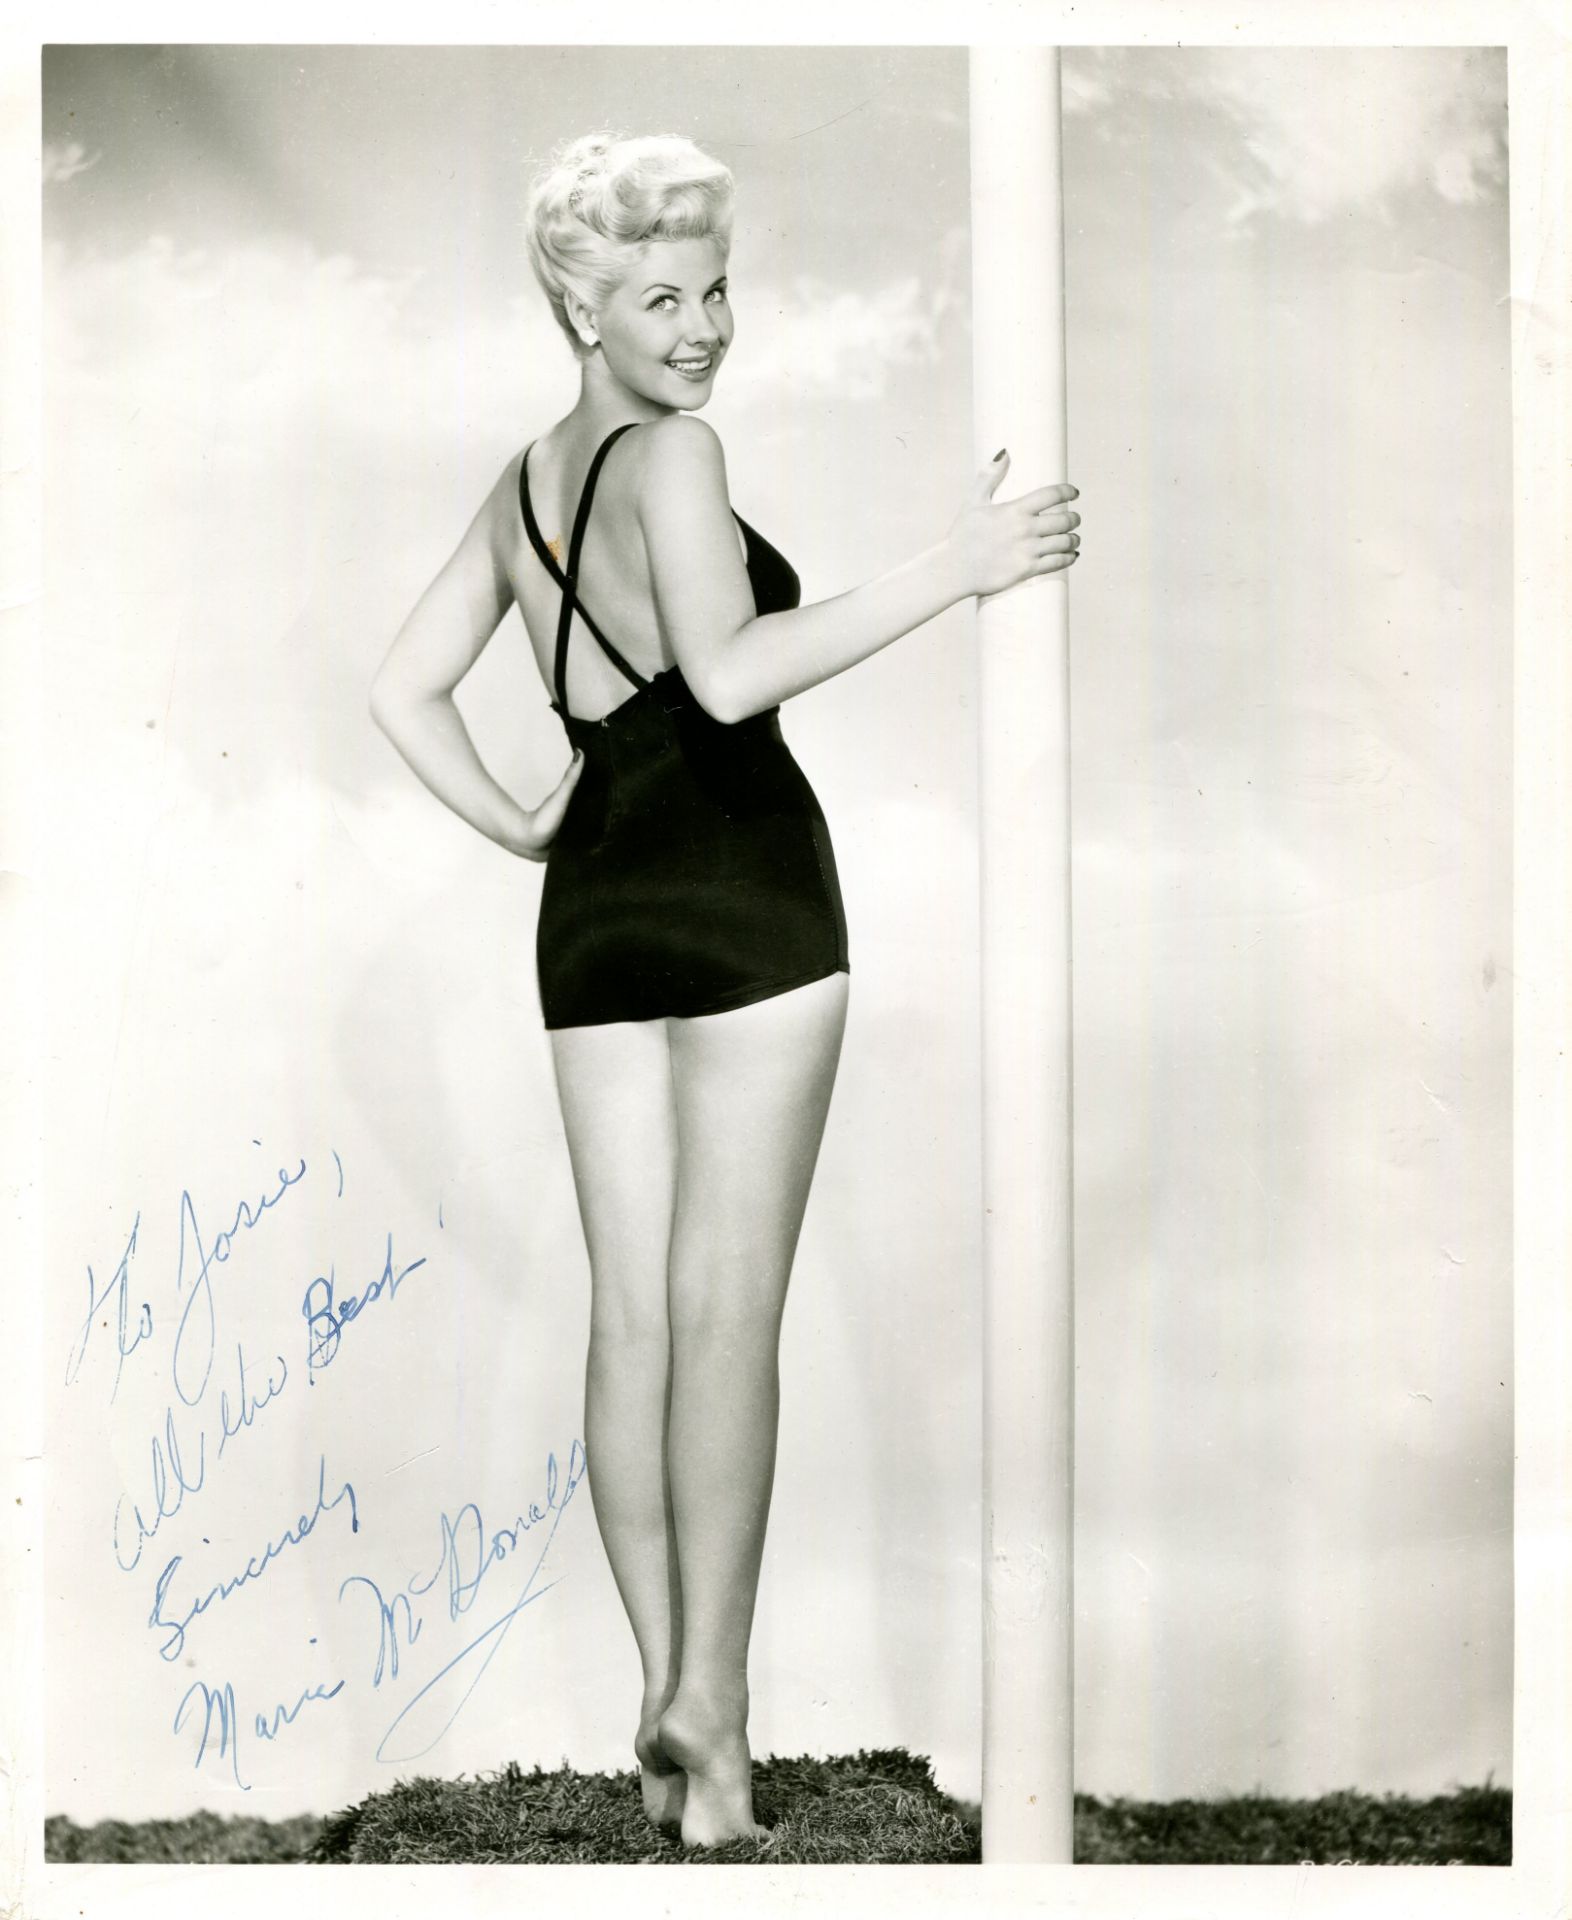 MCDONALD MARIE: (1923-1965) American actress and singer.